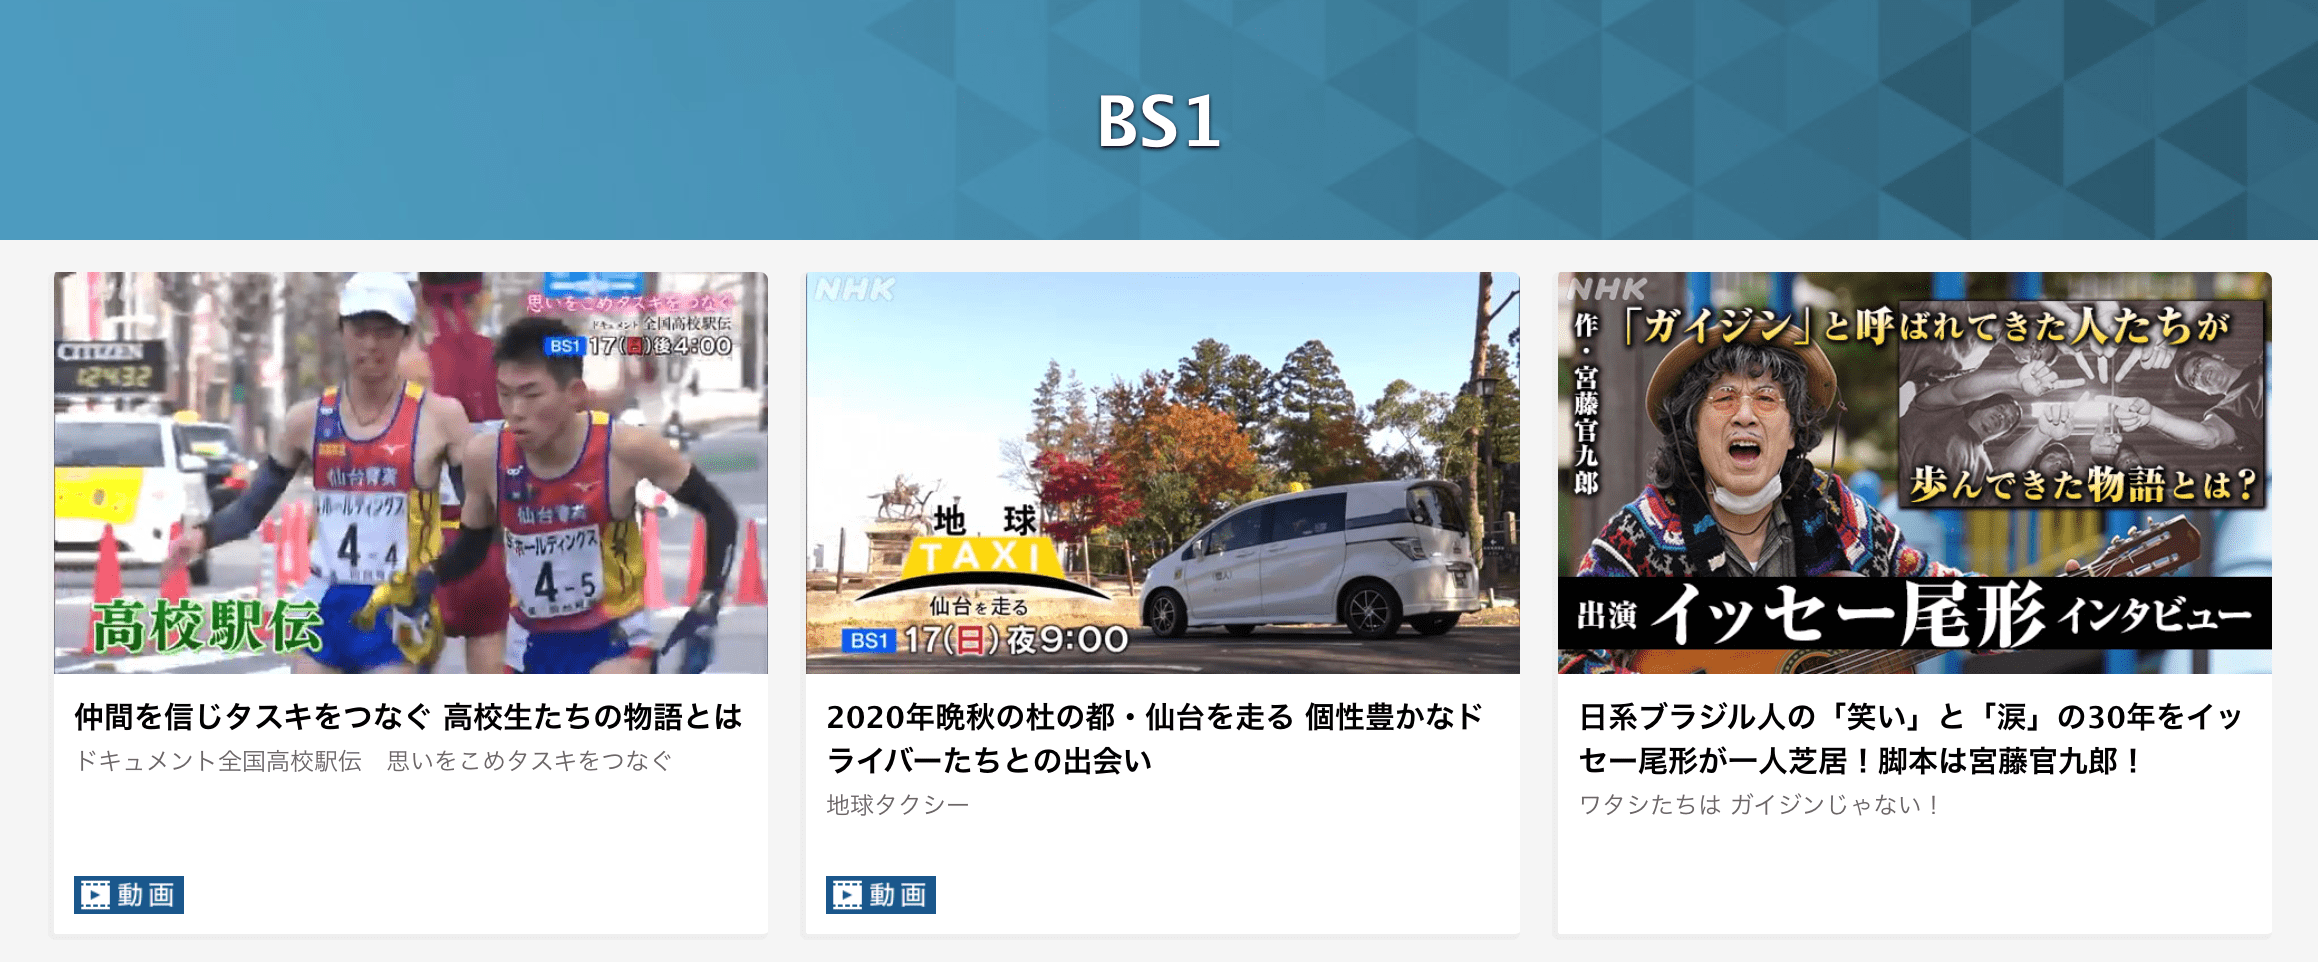 NHK公式サイトの画像